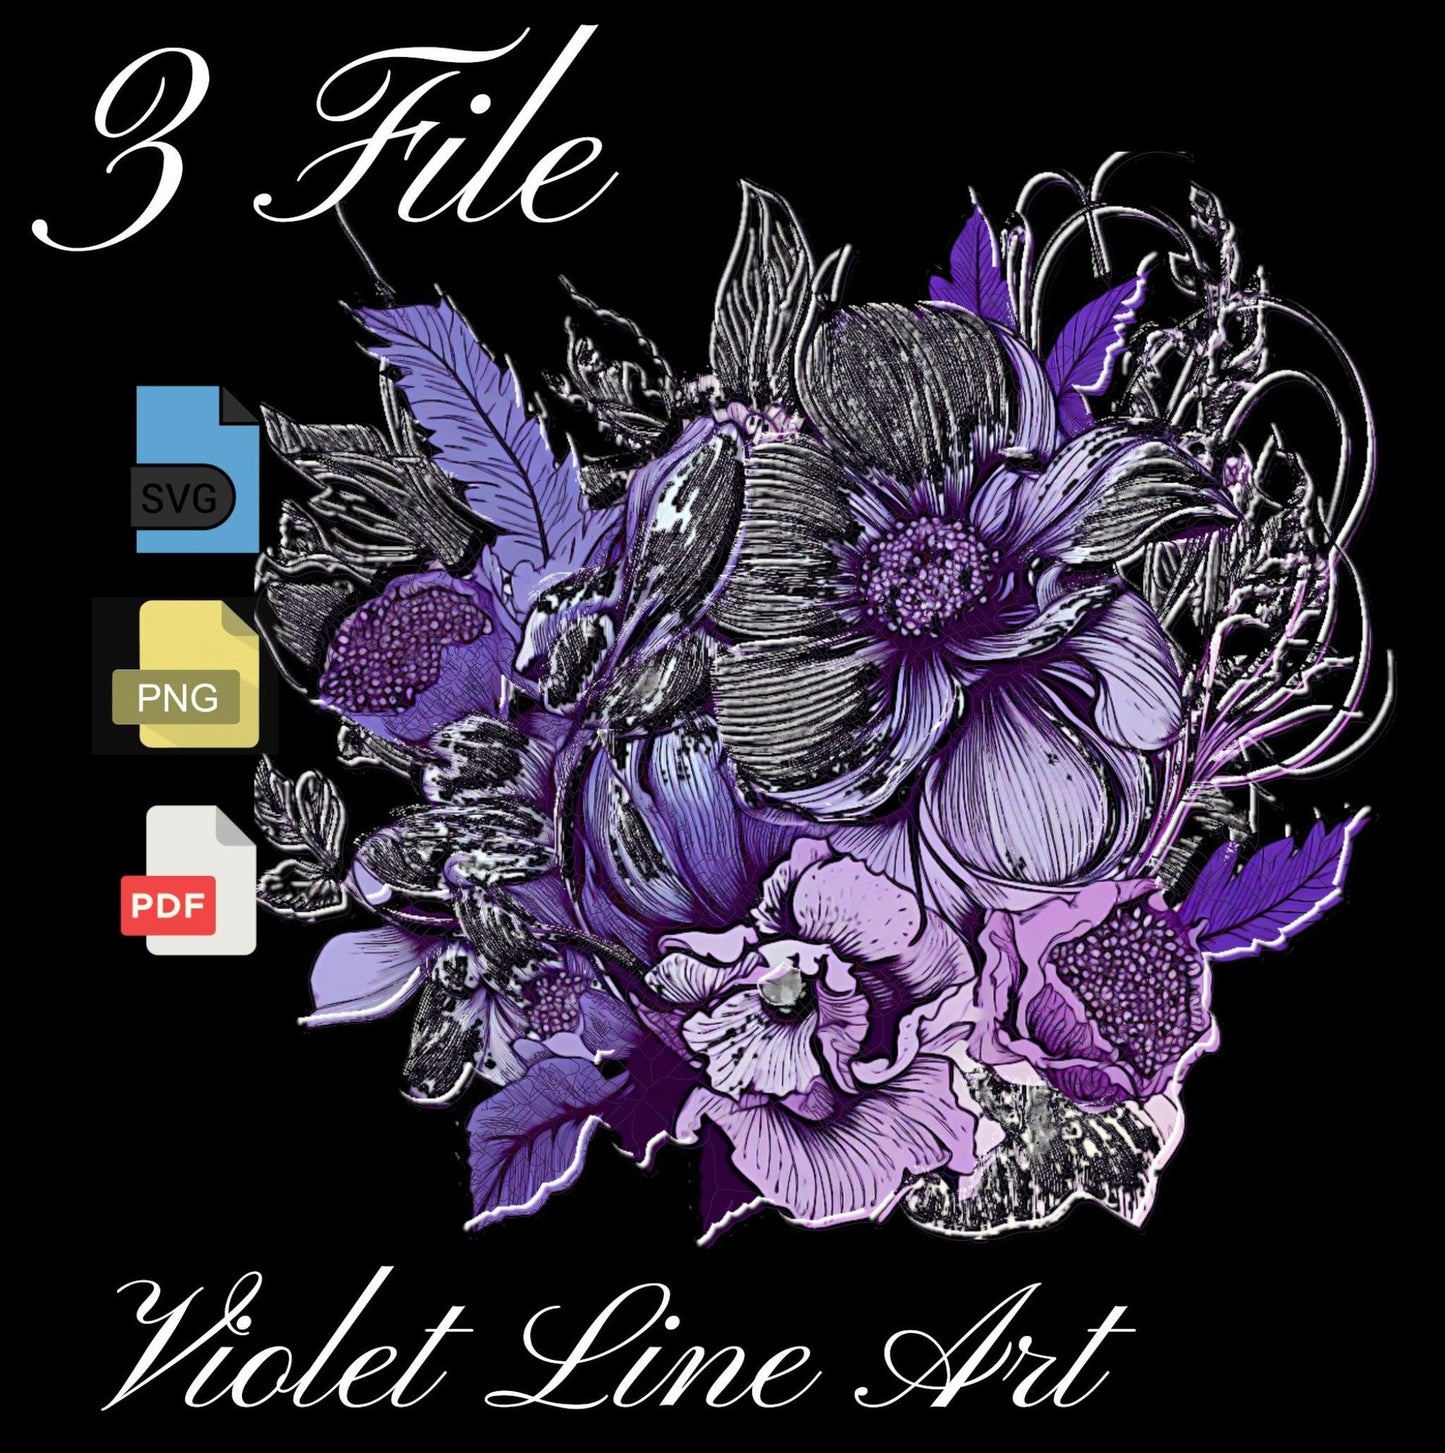 viole line art color 3 file